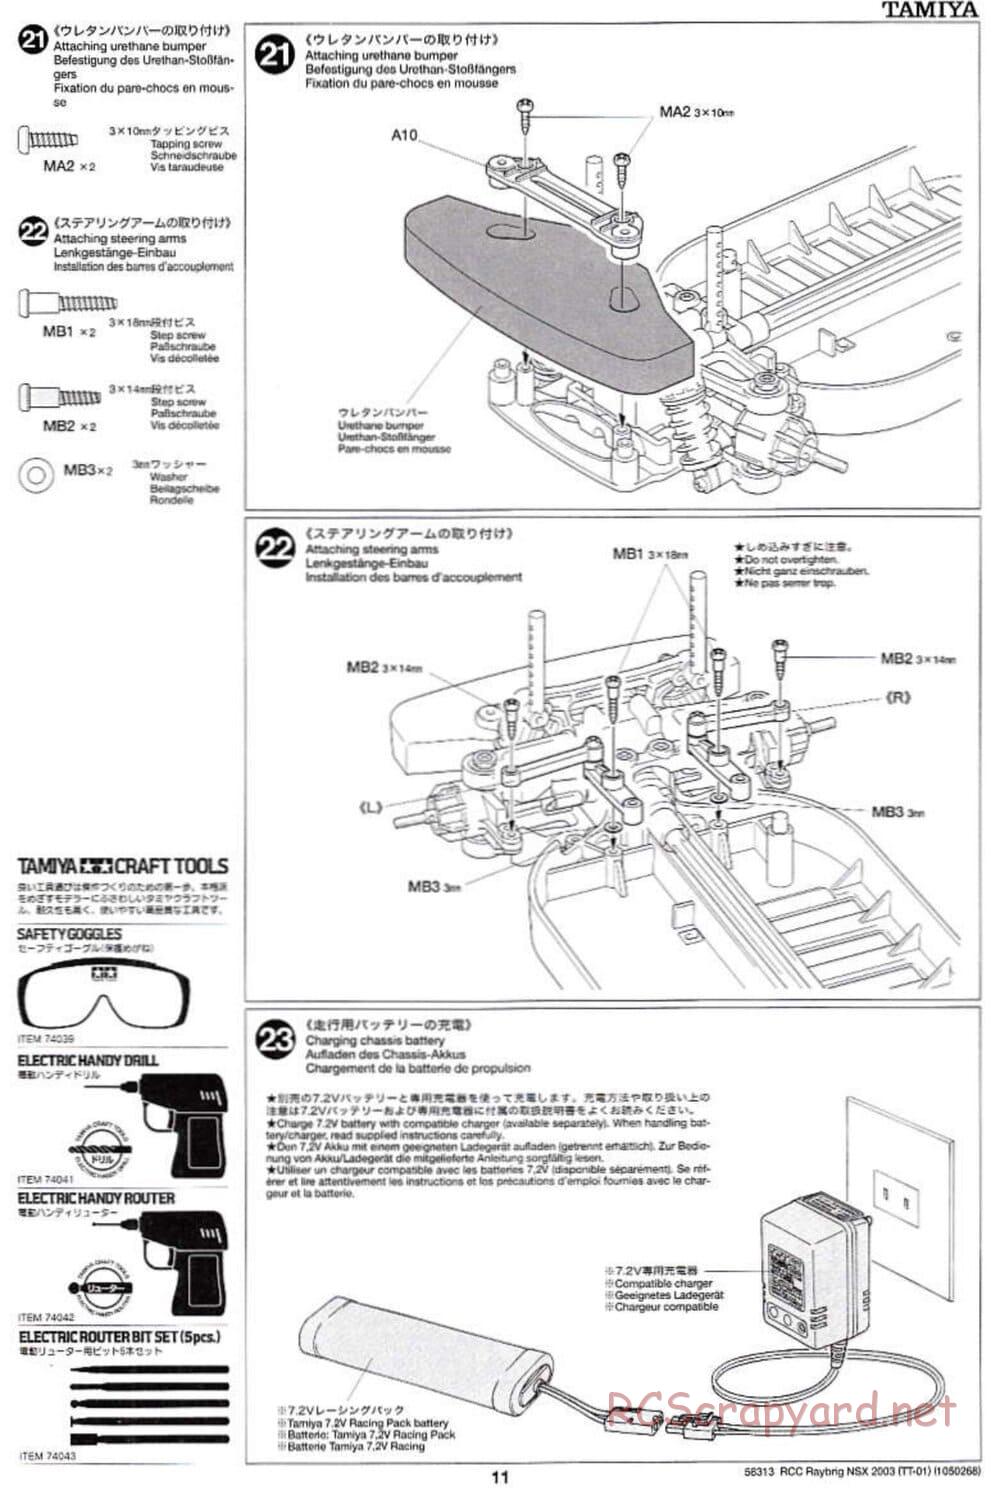 Tamiya - Raybrig NSX 2003 - TT-01 Chassis - Manual - Page 11